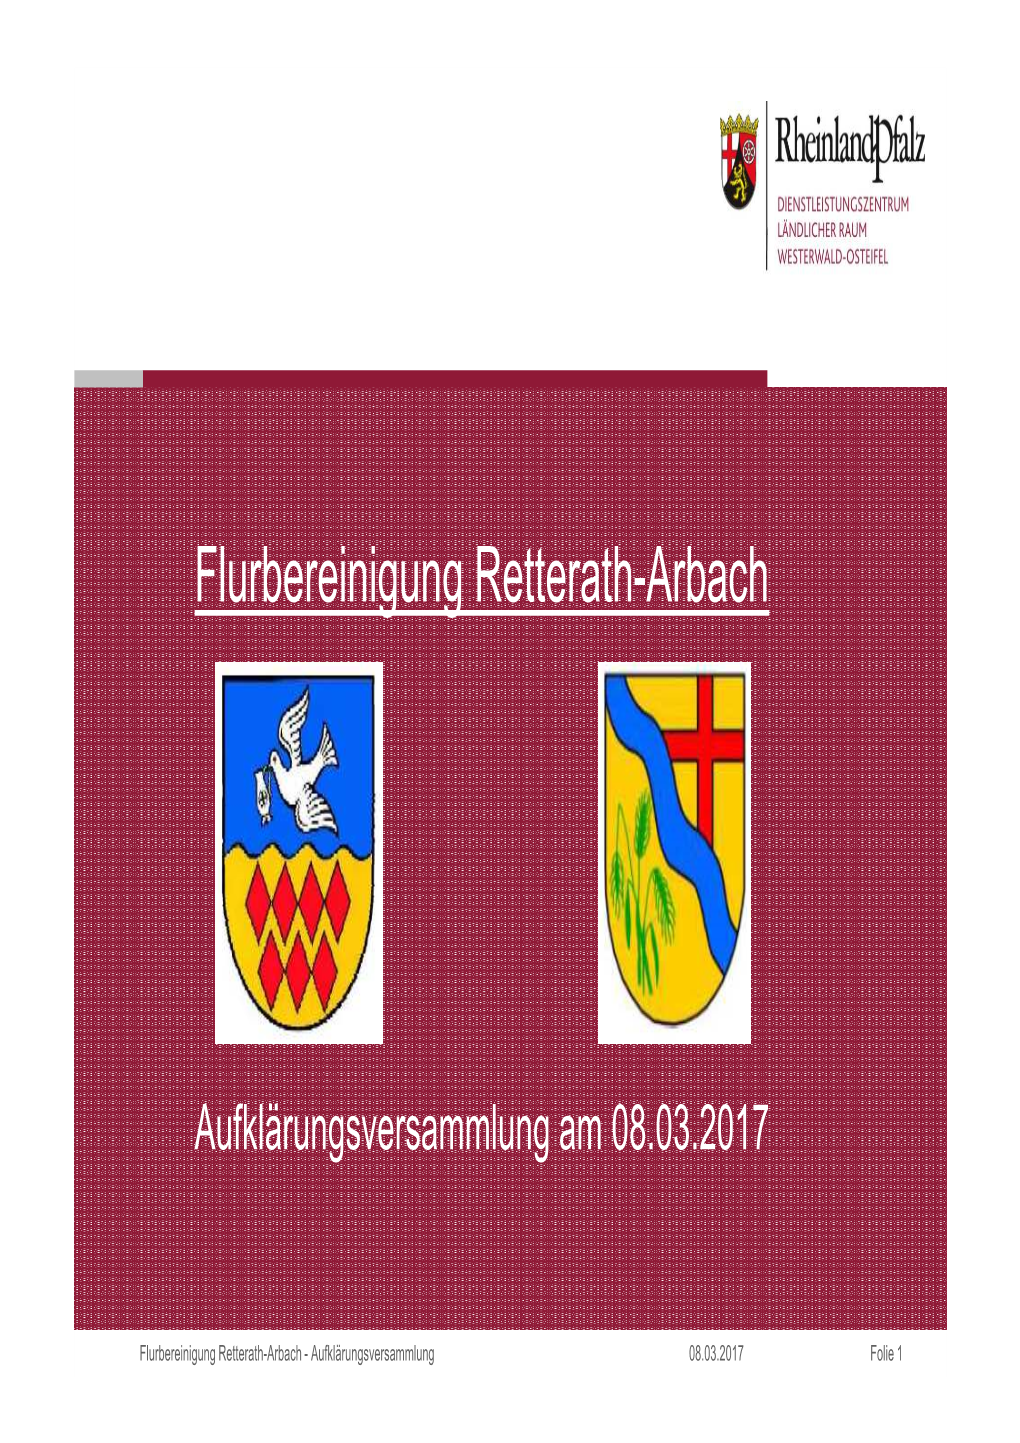 Flurbereinigung Retterath-Arbach